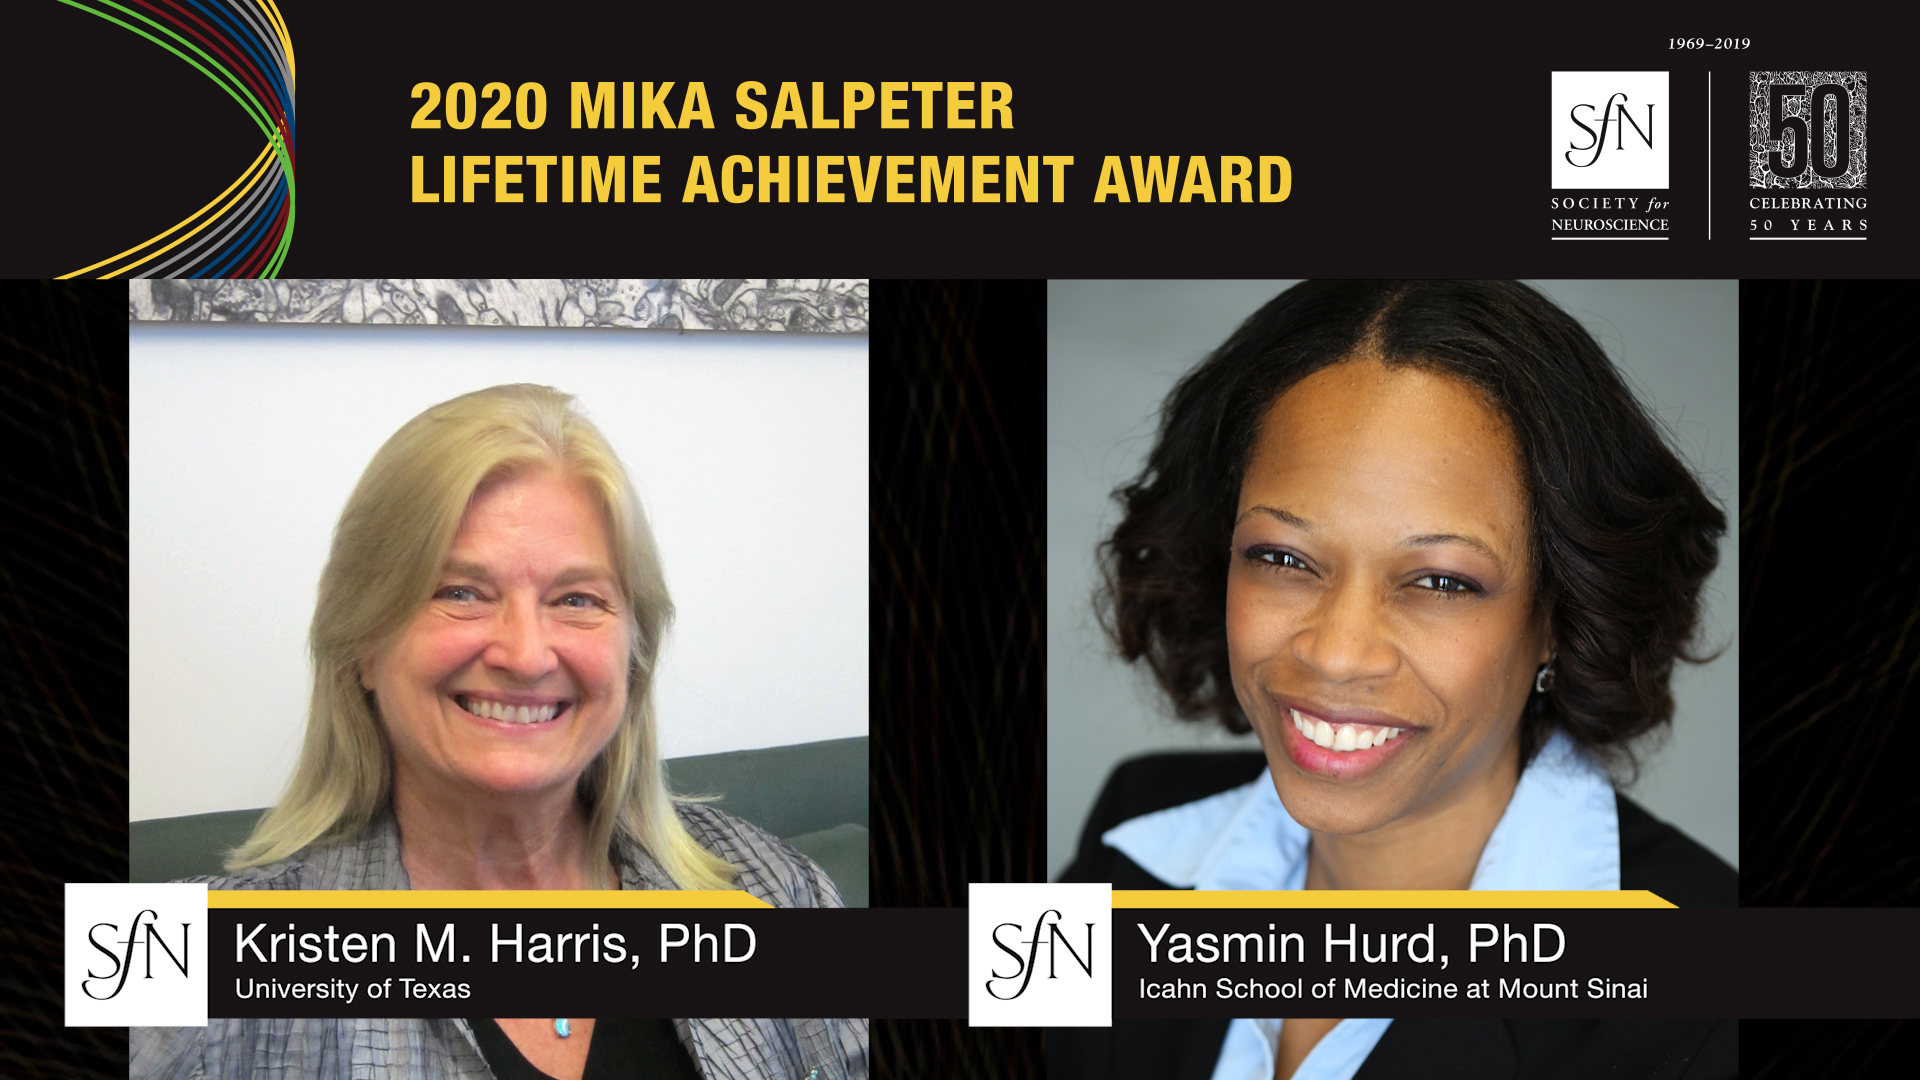 2020 Mika Salpeter Lifetime Achievement Award winners graphic, images of Kristen M. Harris, PhD University of Texas and Yasmin Hurd, PhD Icahn School of Medicine at Mount Sinai